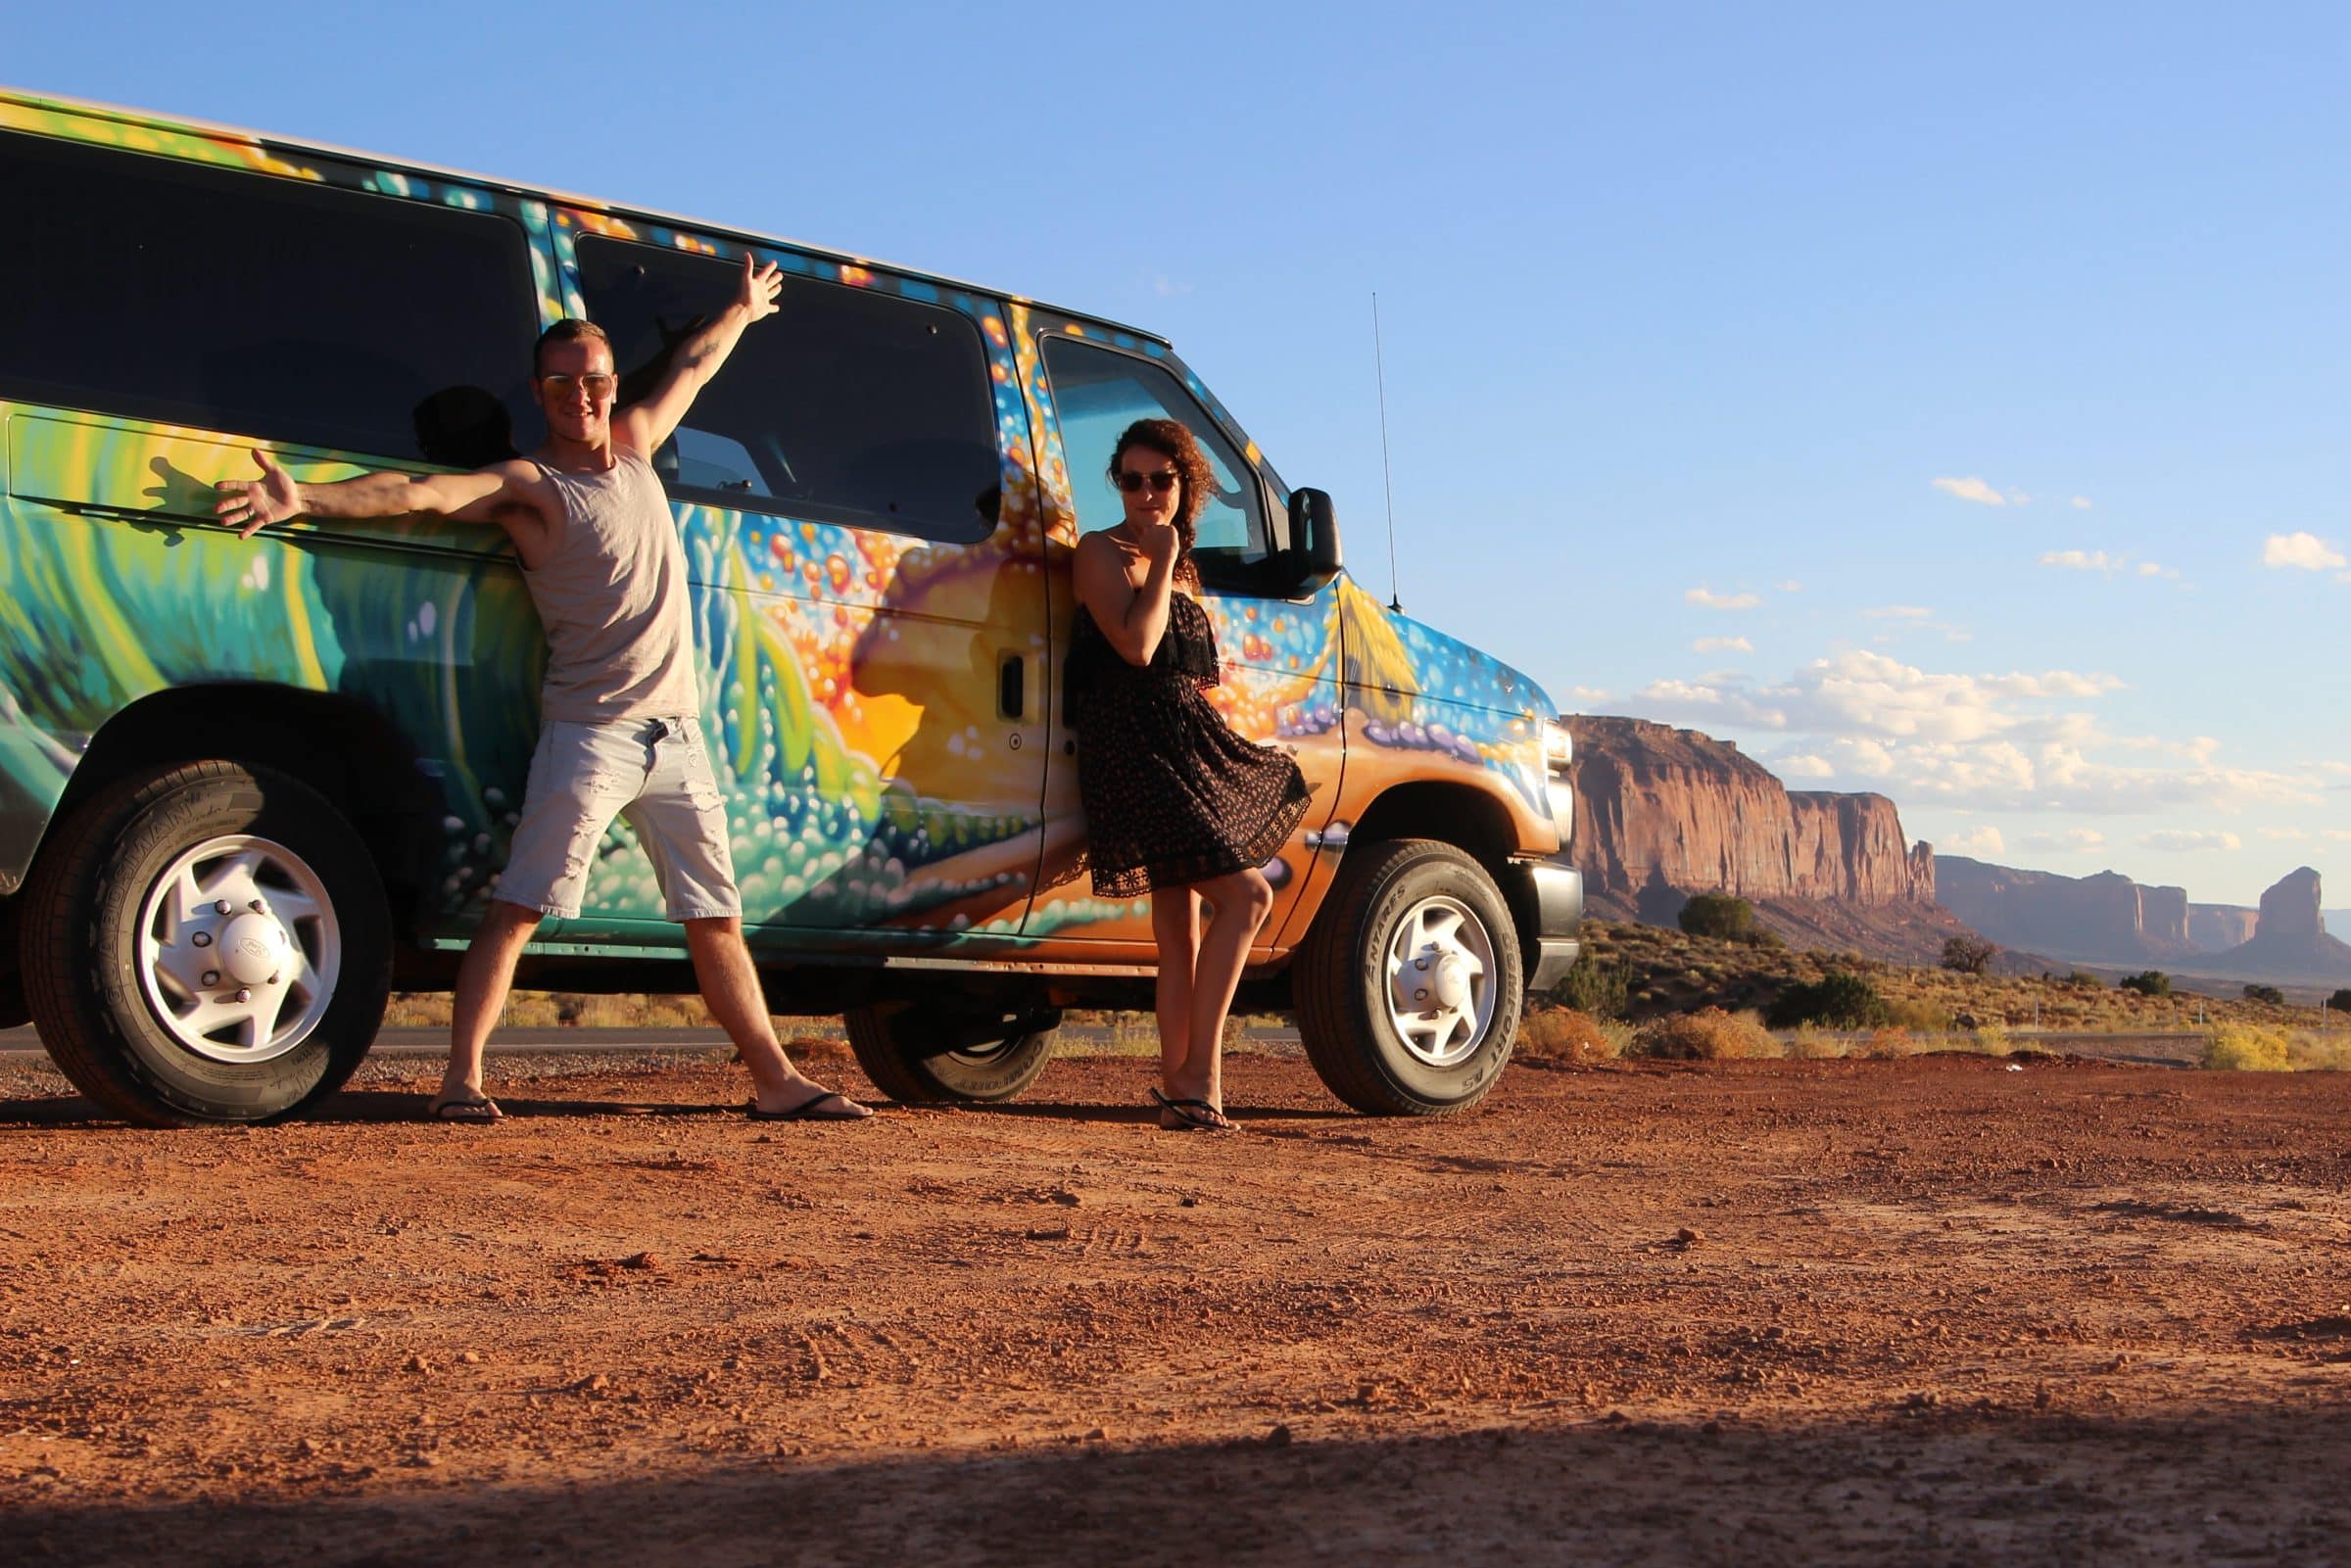 Malou en ik in Monument Valley, USA | Canon D600 spiegelreflex camera met standaard kitlens